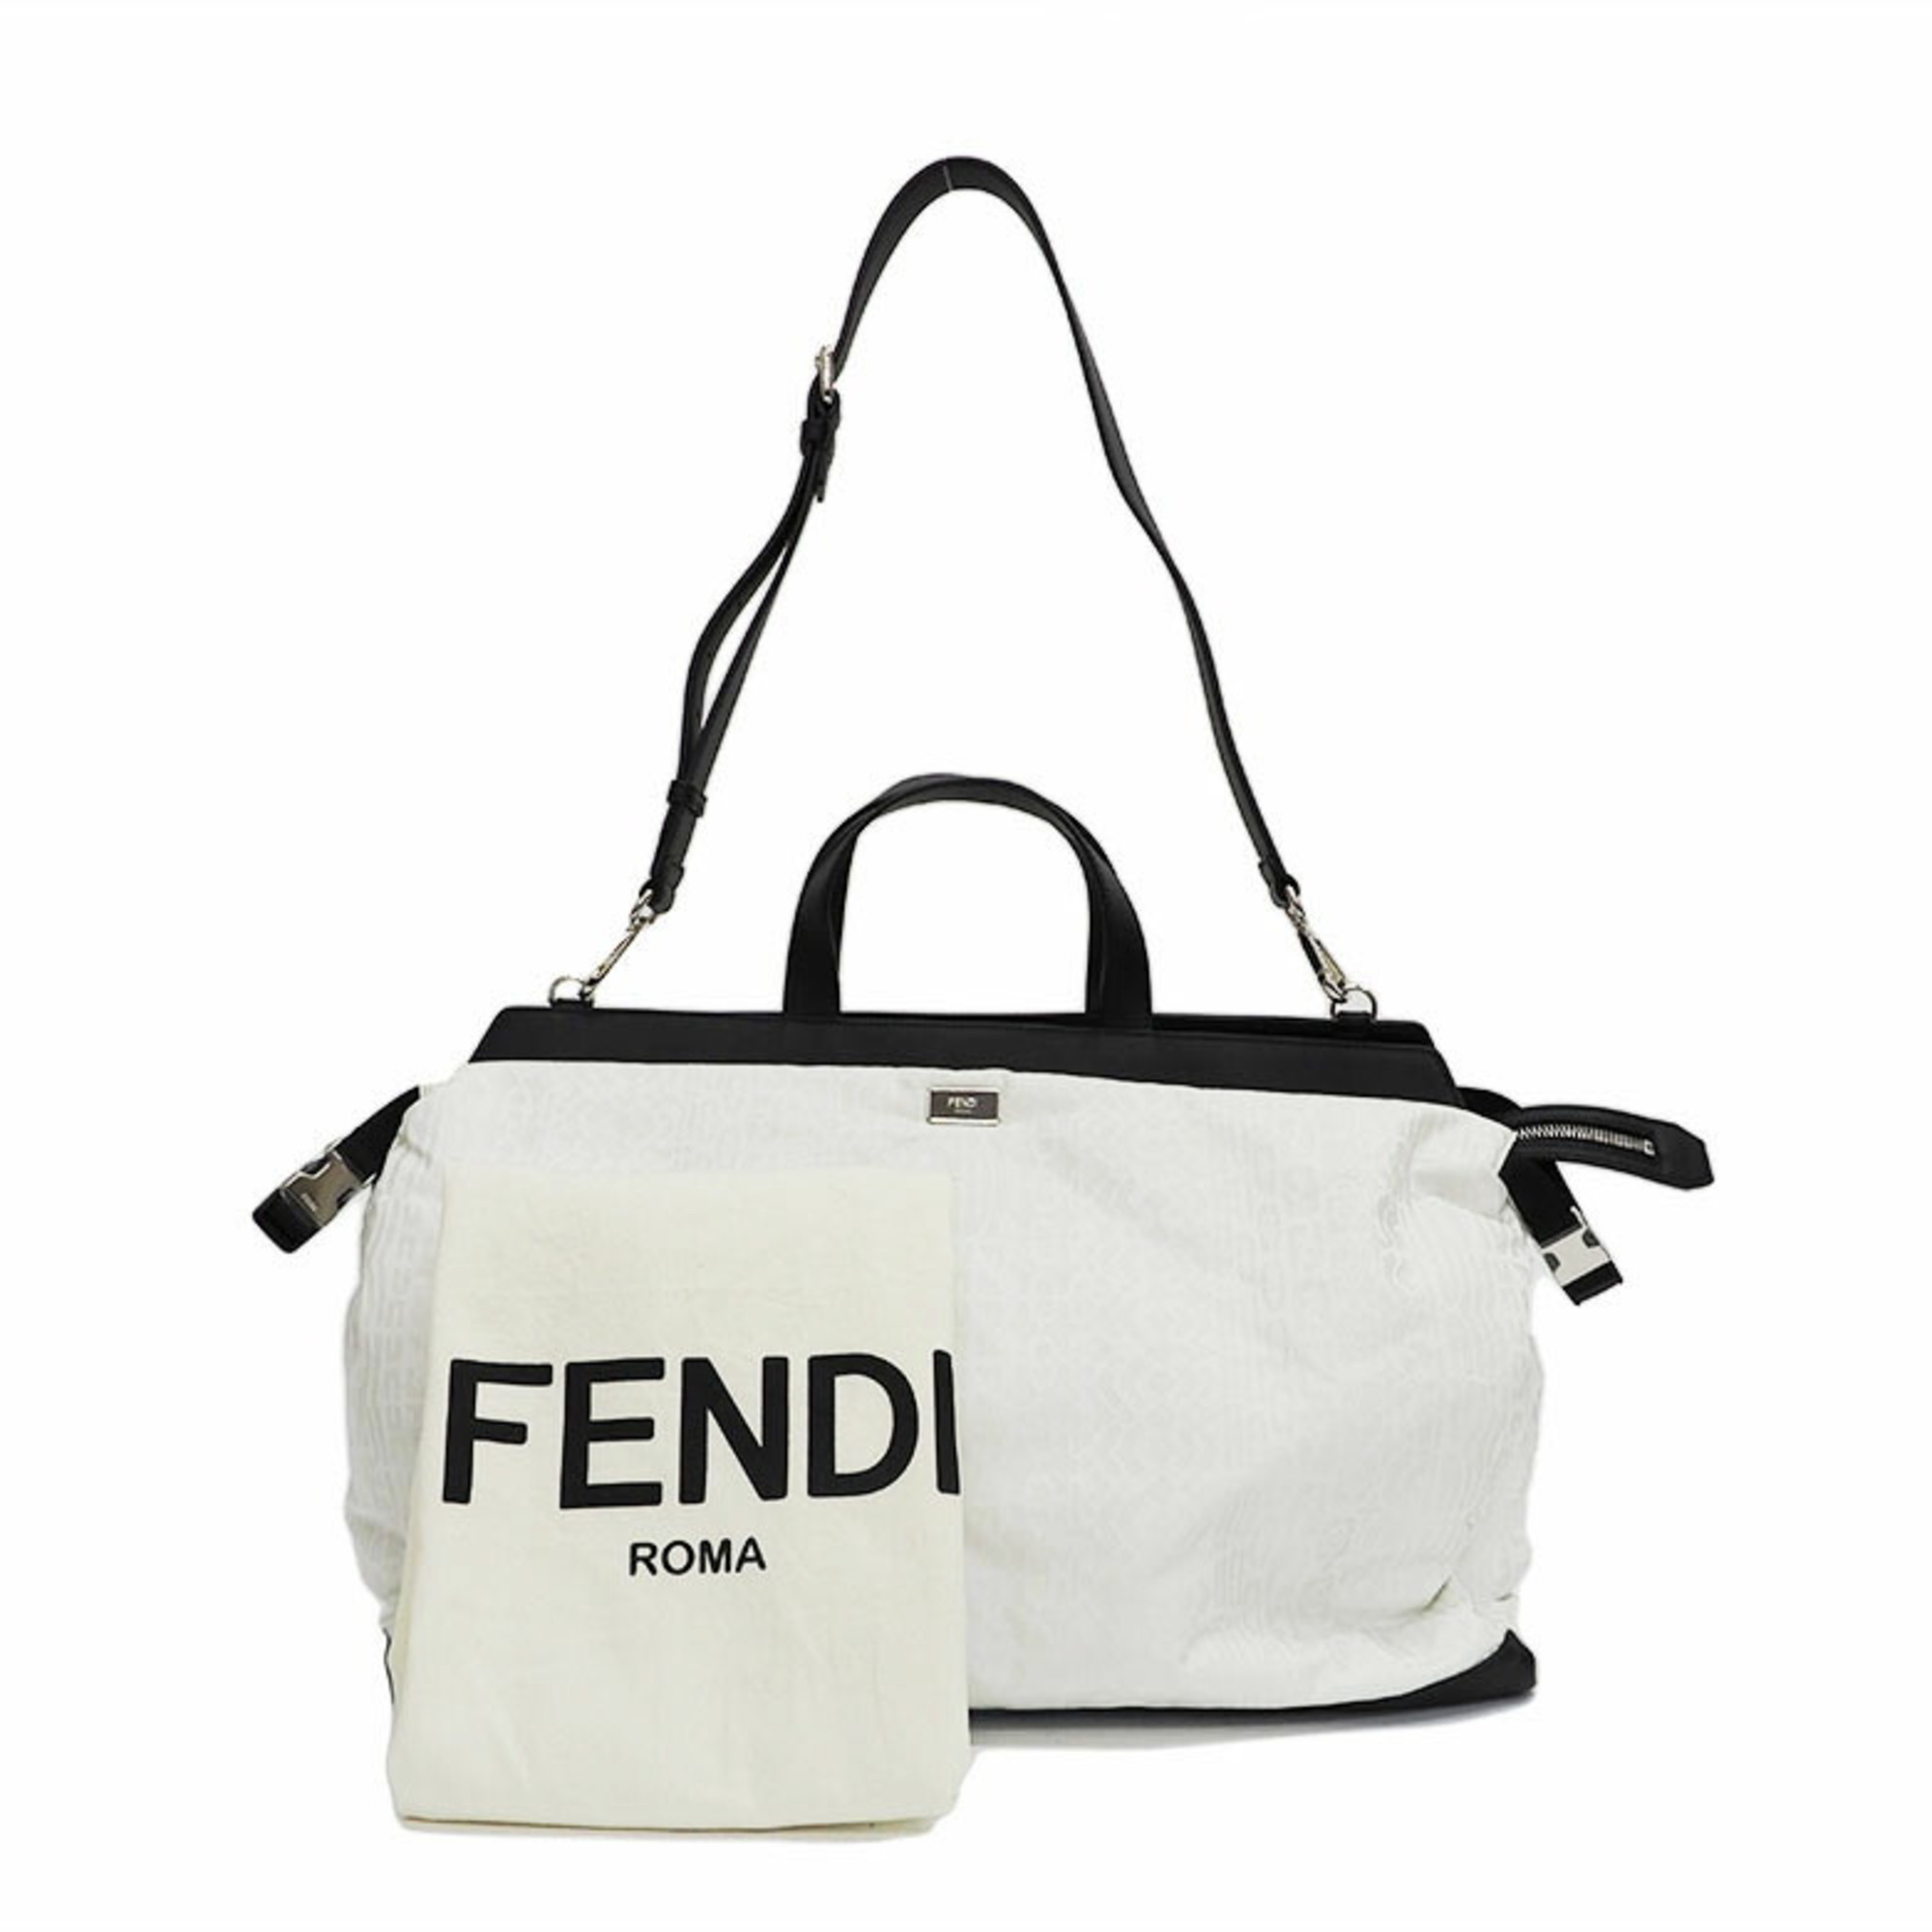 Fendi FENDI ANREALAGE Collaboration Peekaboo Iconic Large Boston Bag White 7VA502 Men's